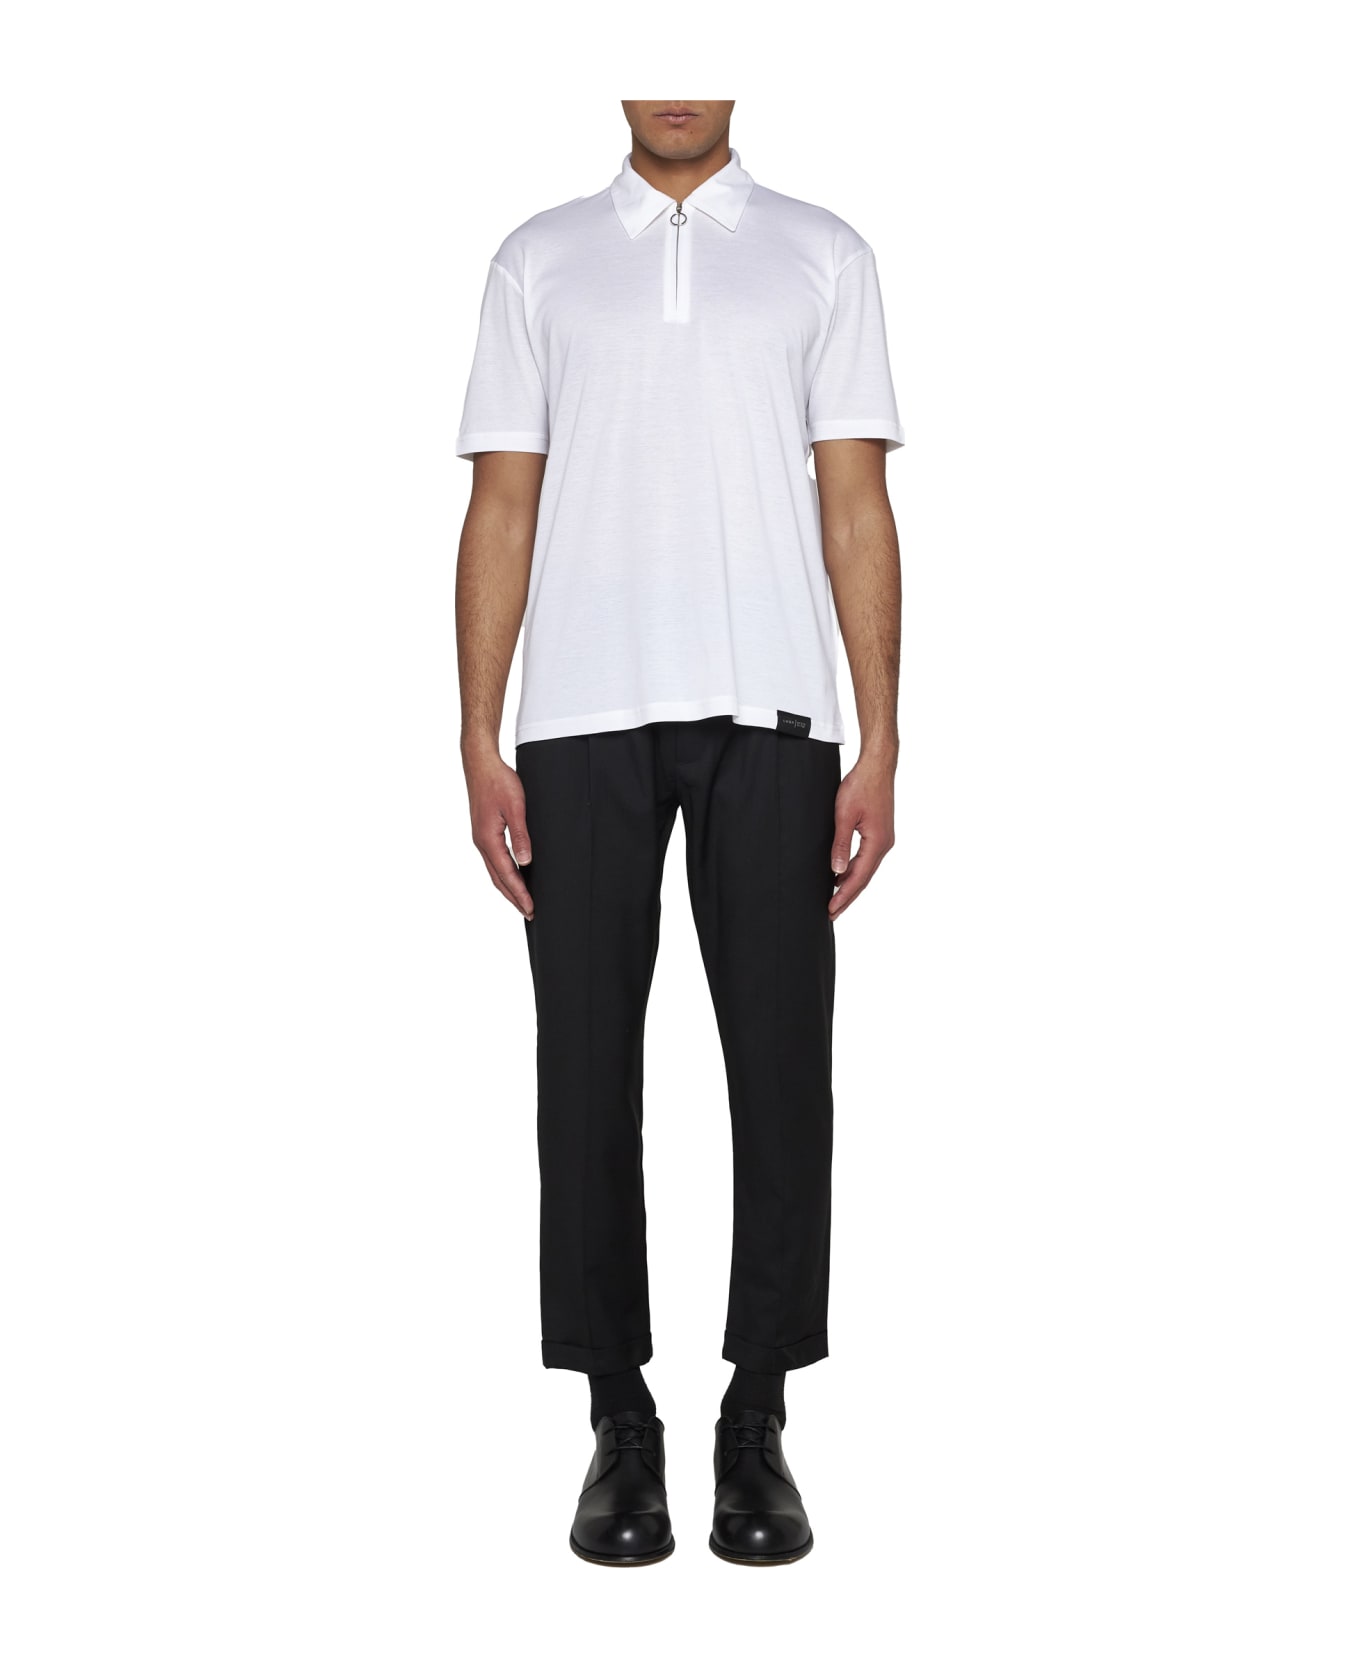 Low Brand Polo Shirt - White ポロシャツ